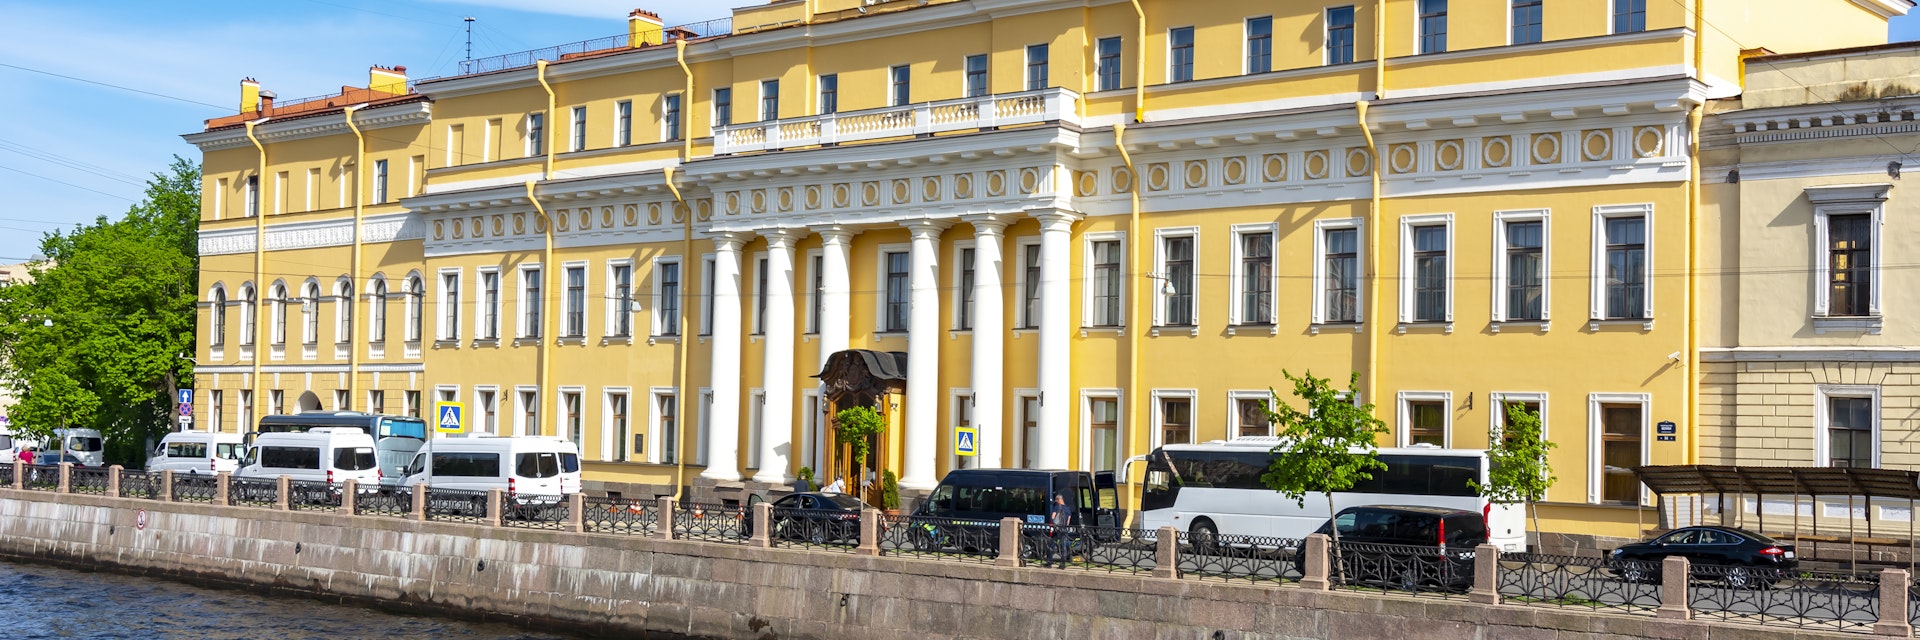 Yusupov palace on the Moyka river.
